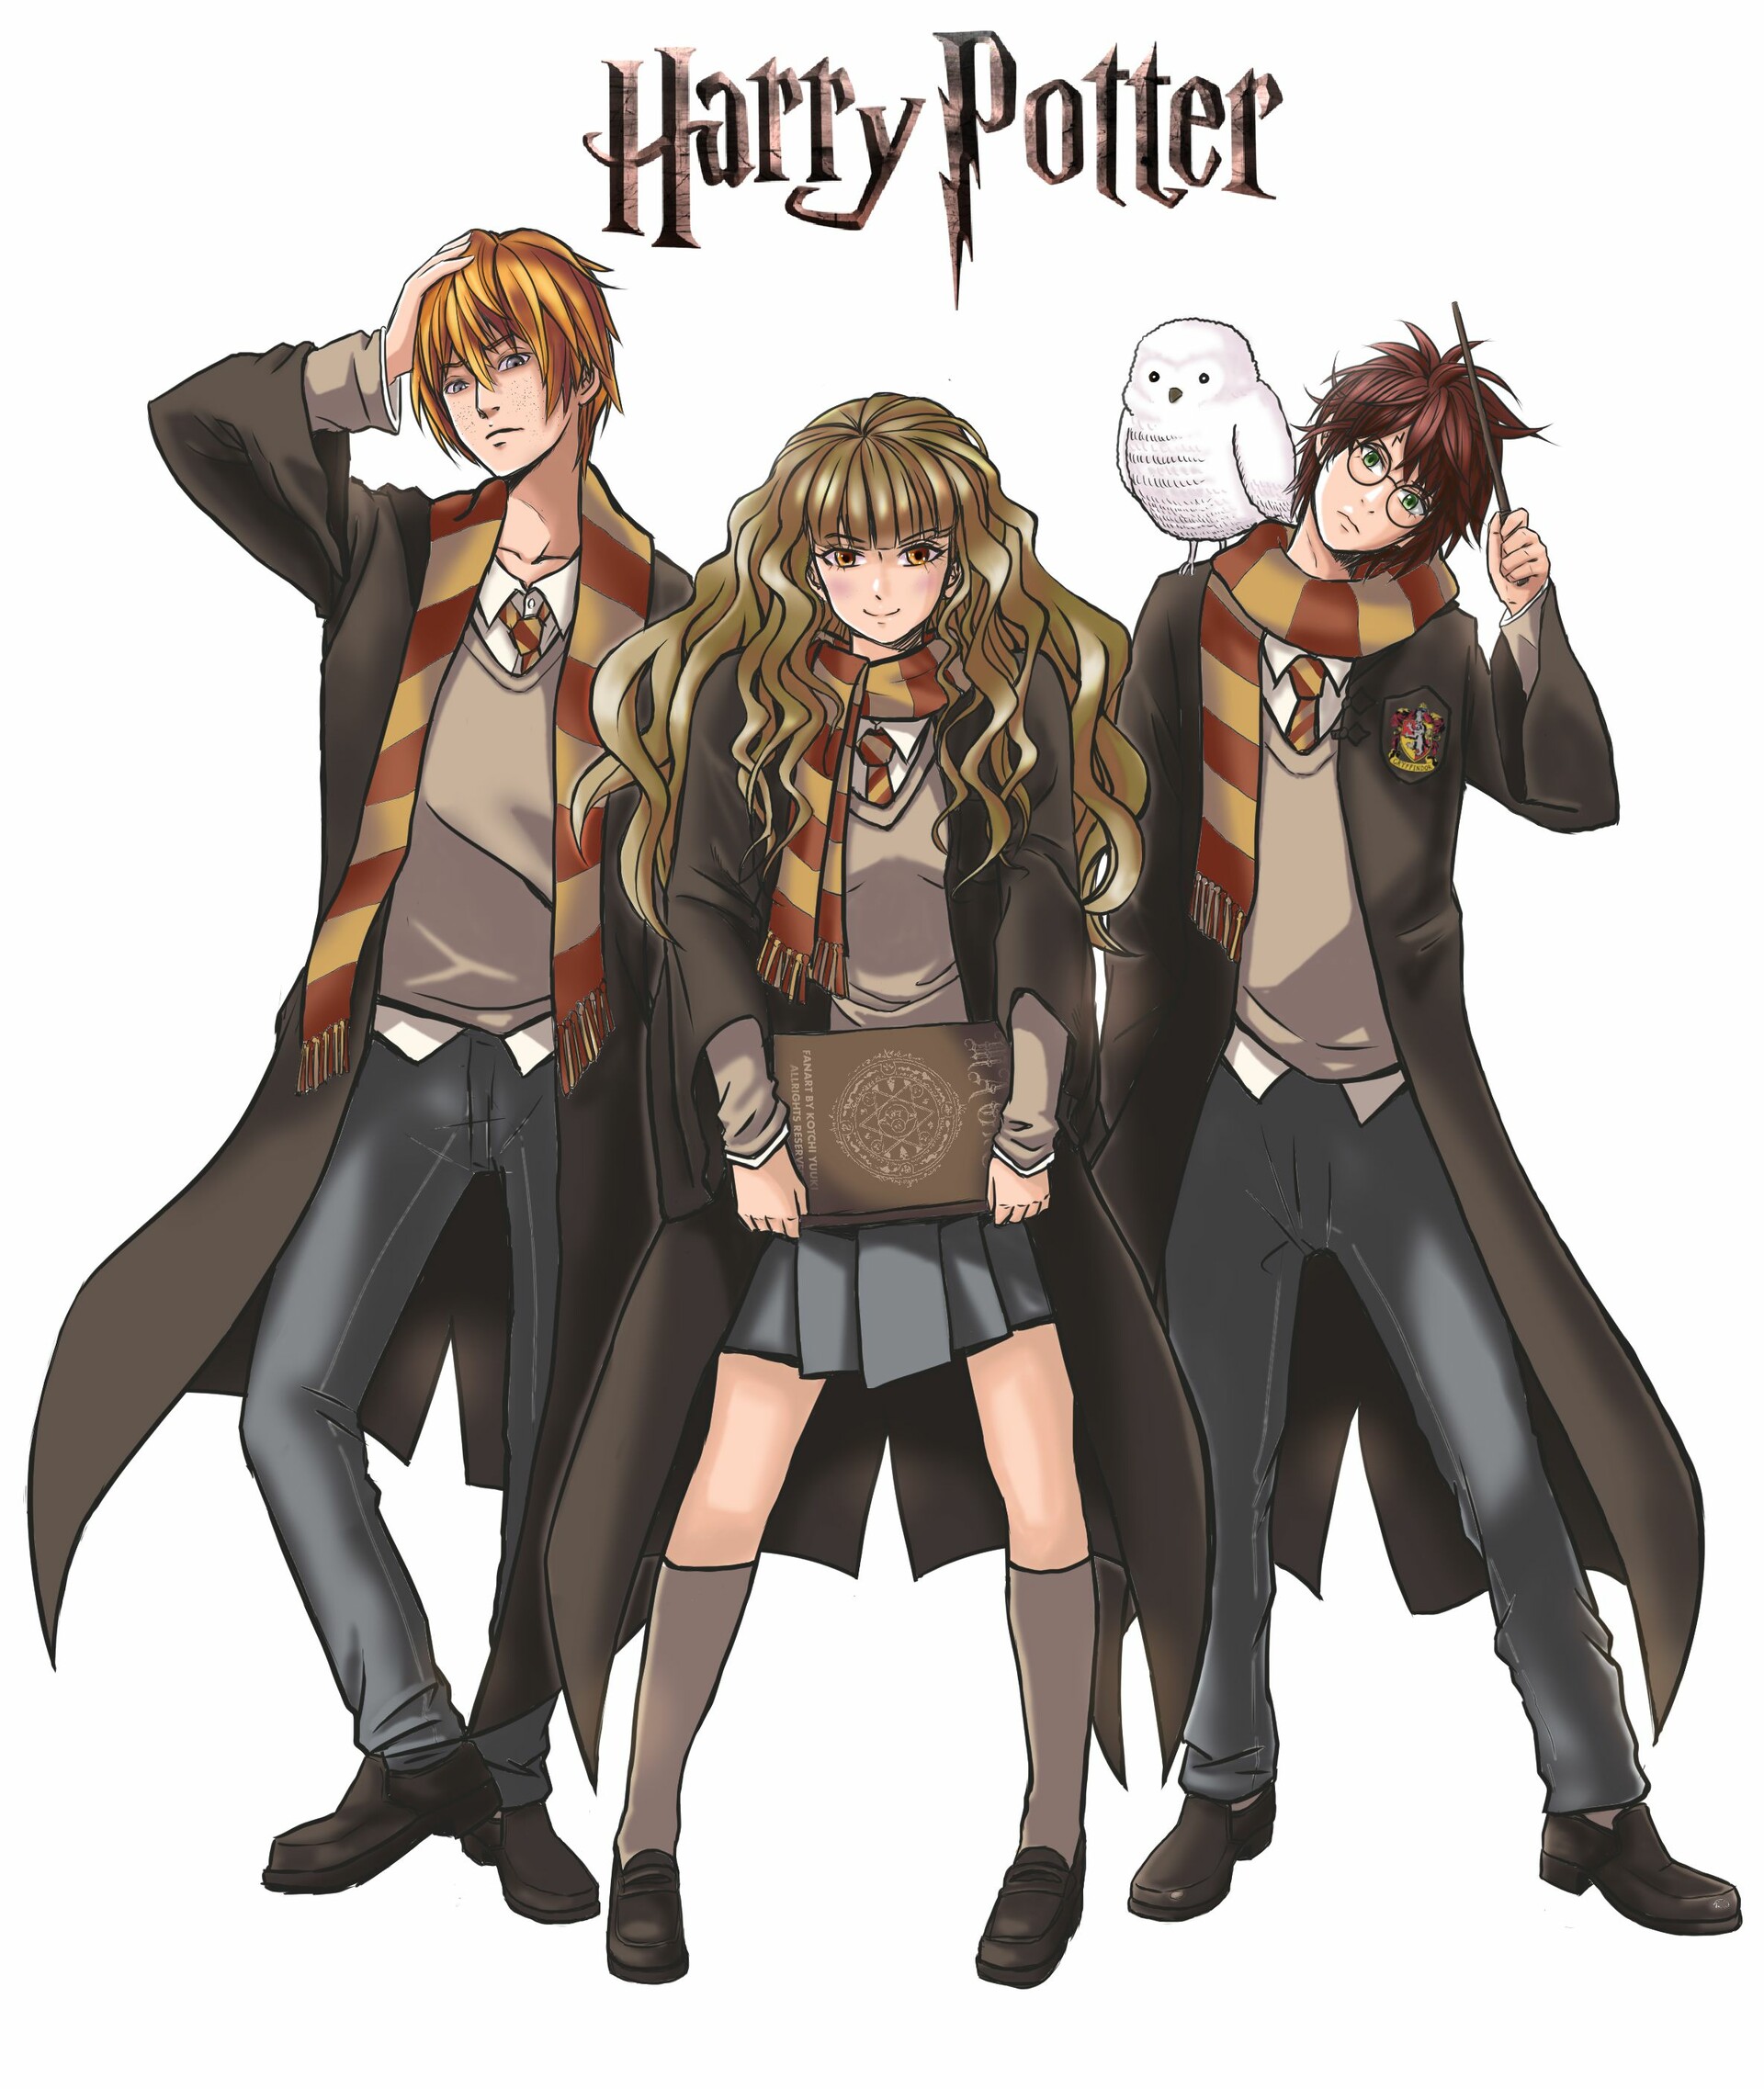 Kotchi Yuuki - Harry Potter anime version